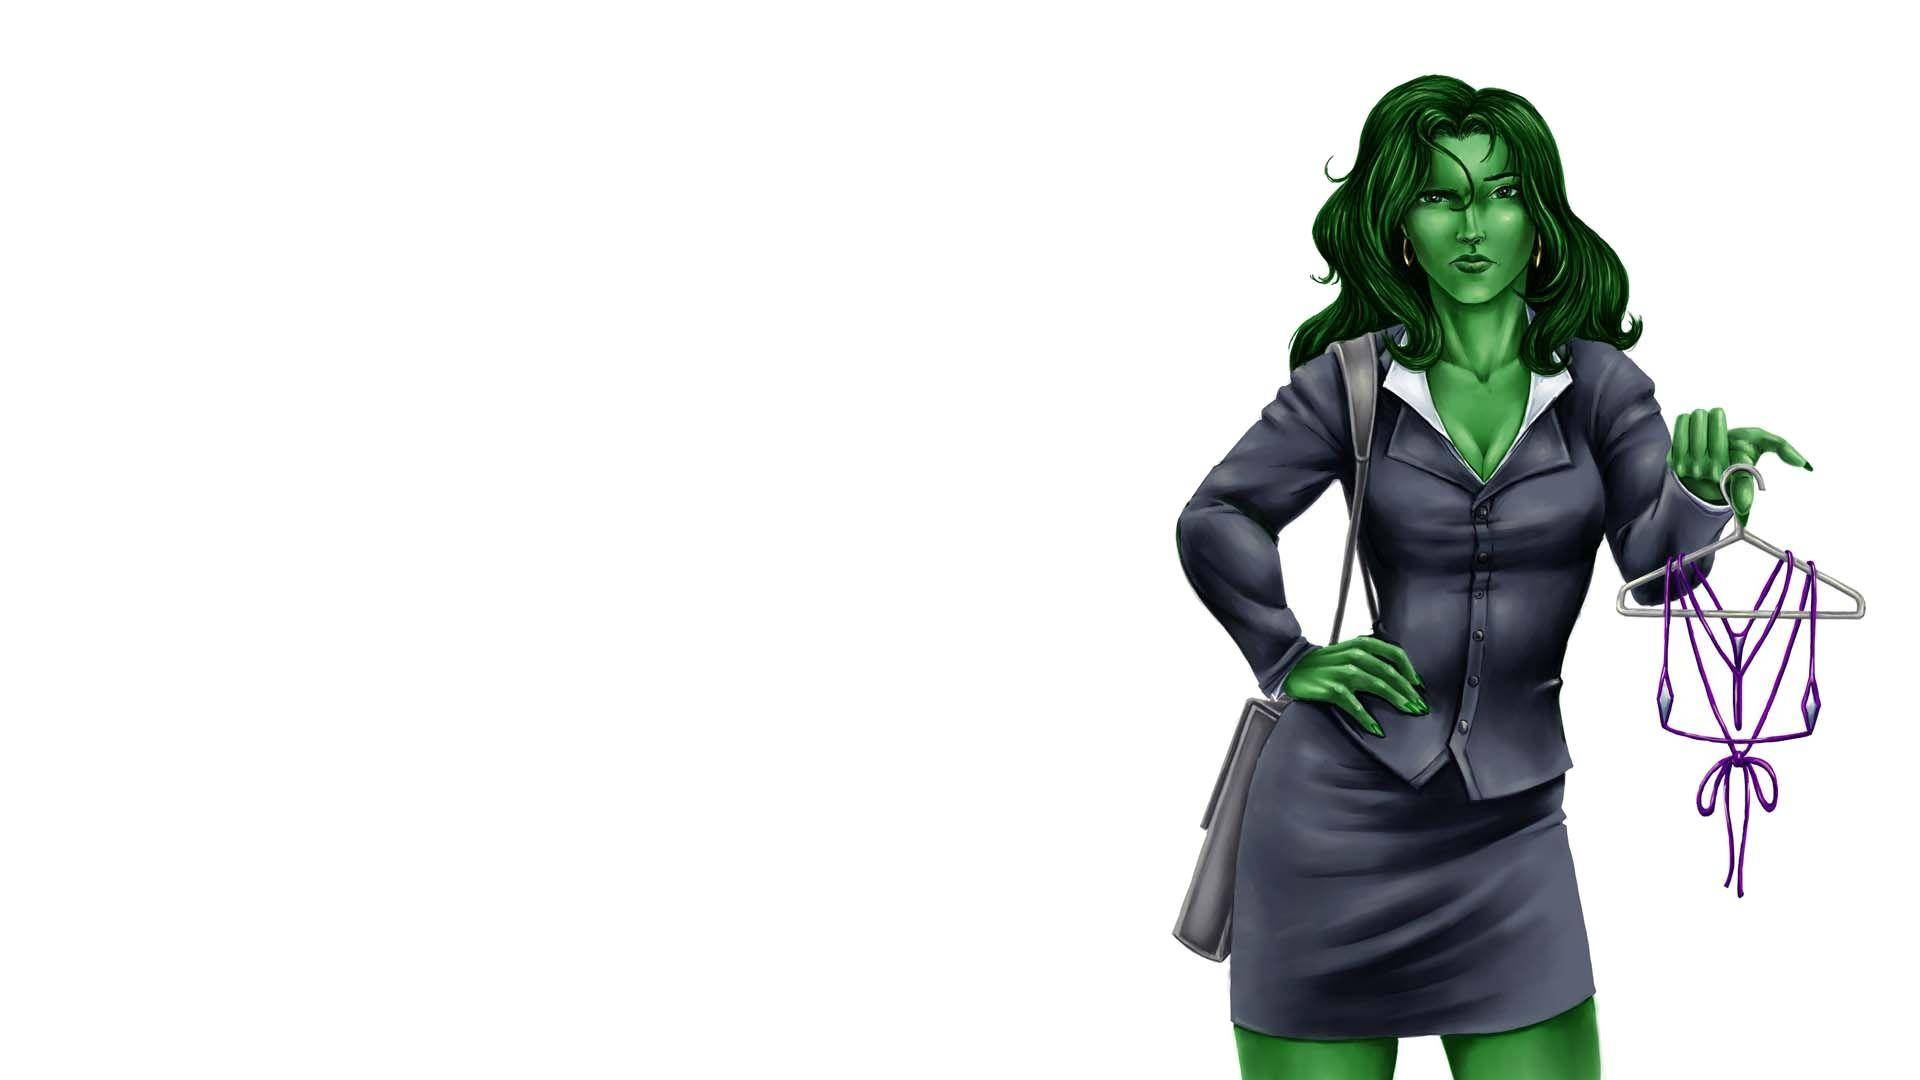 Mighty She-hulk Showcasing Her Powerful Stance